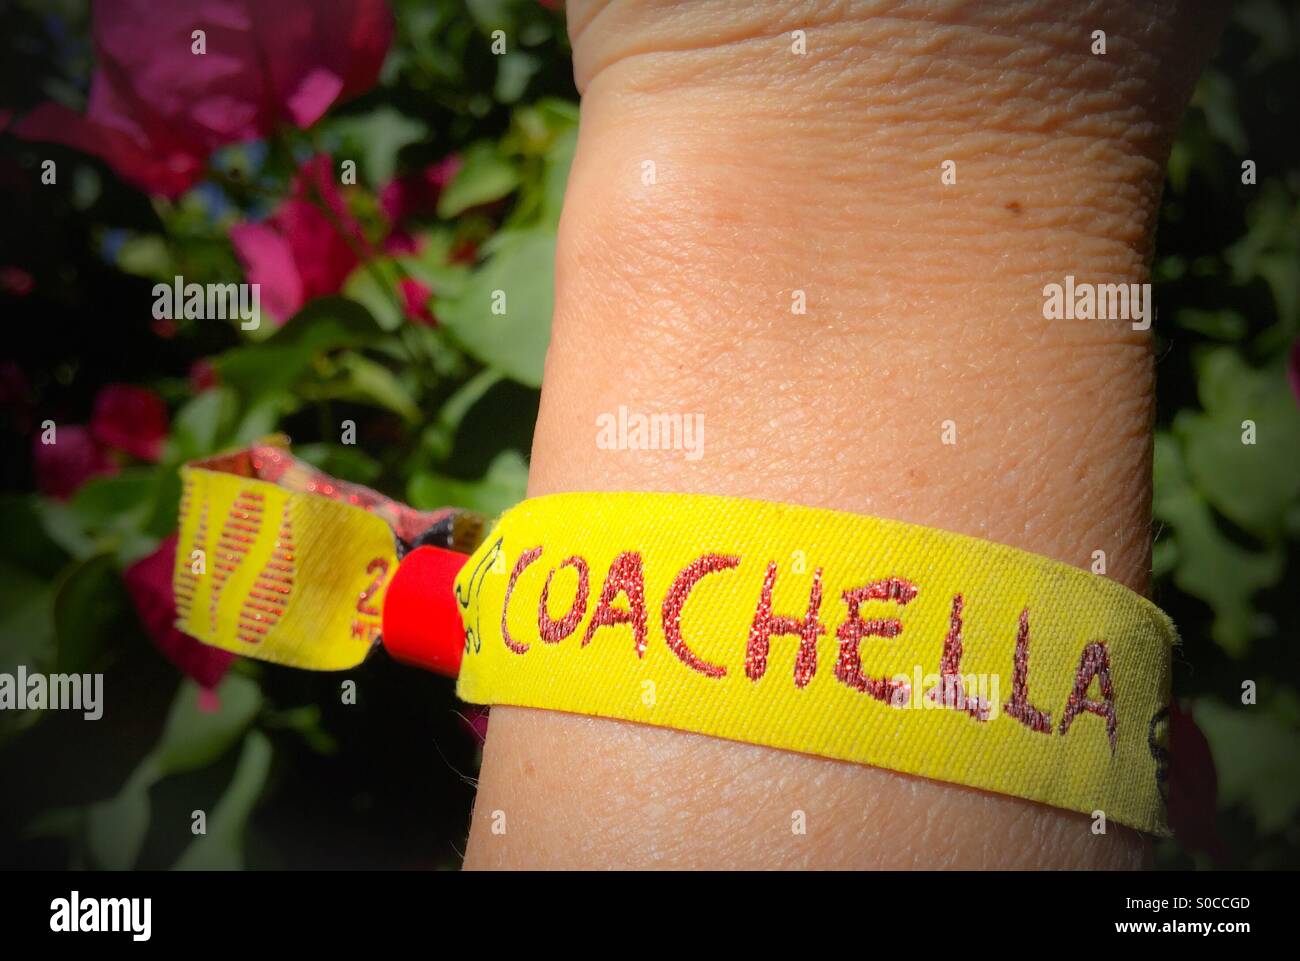 Coachella Music Festival wrist band Stock Photo - Alamy